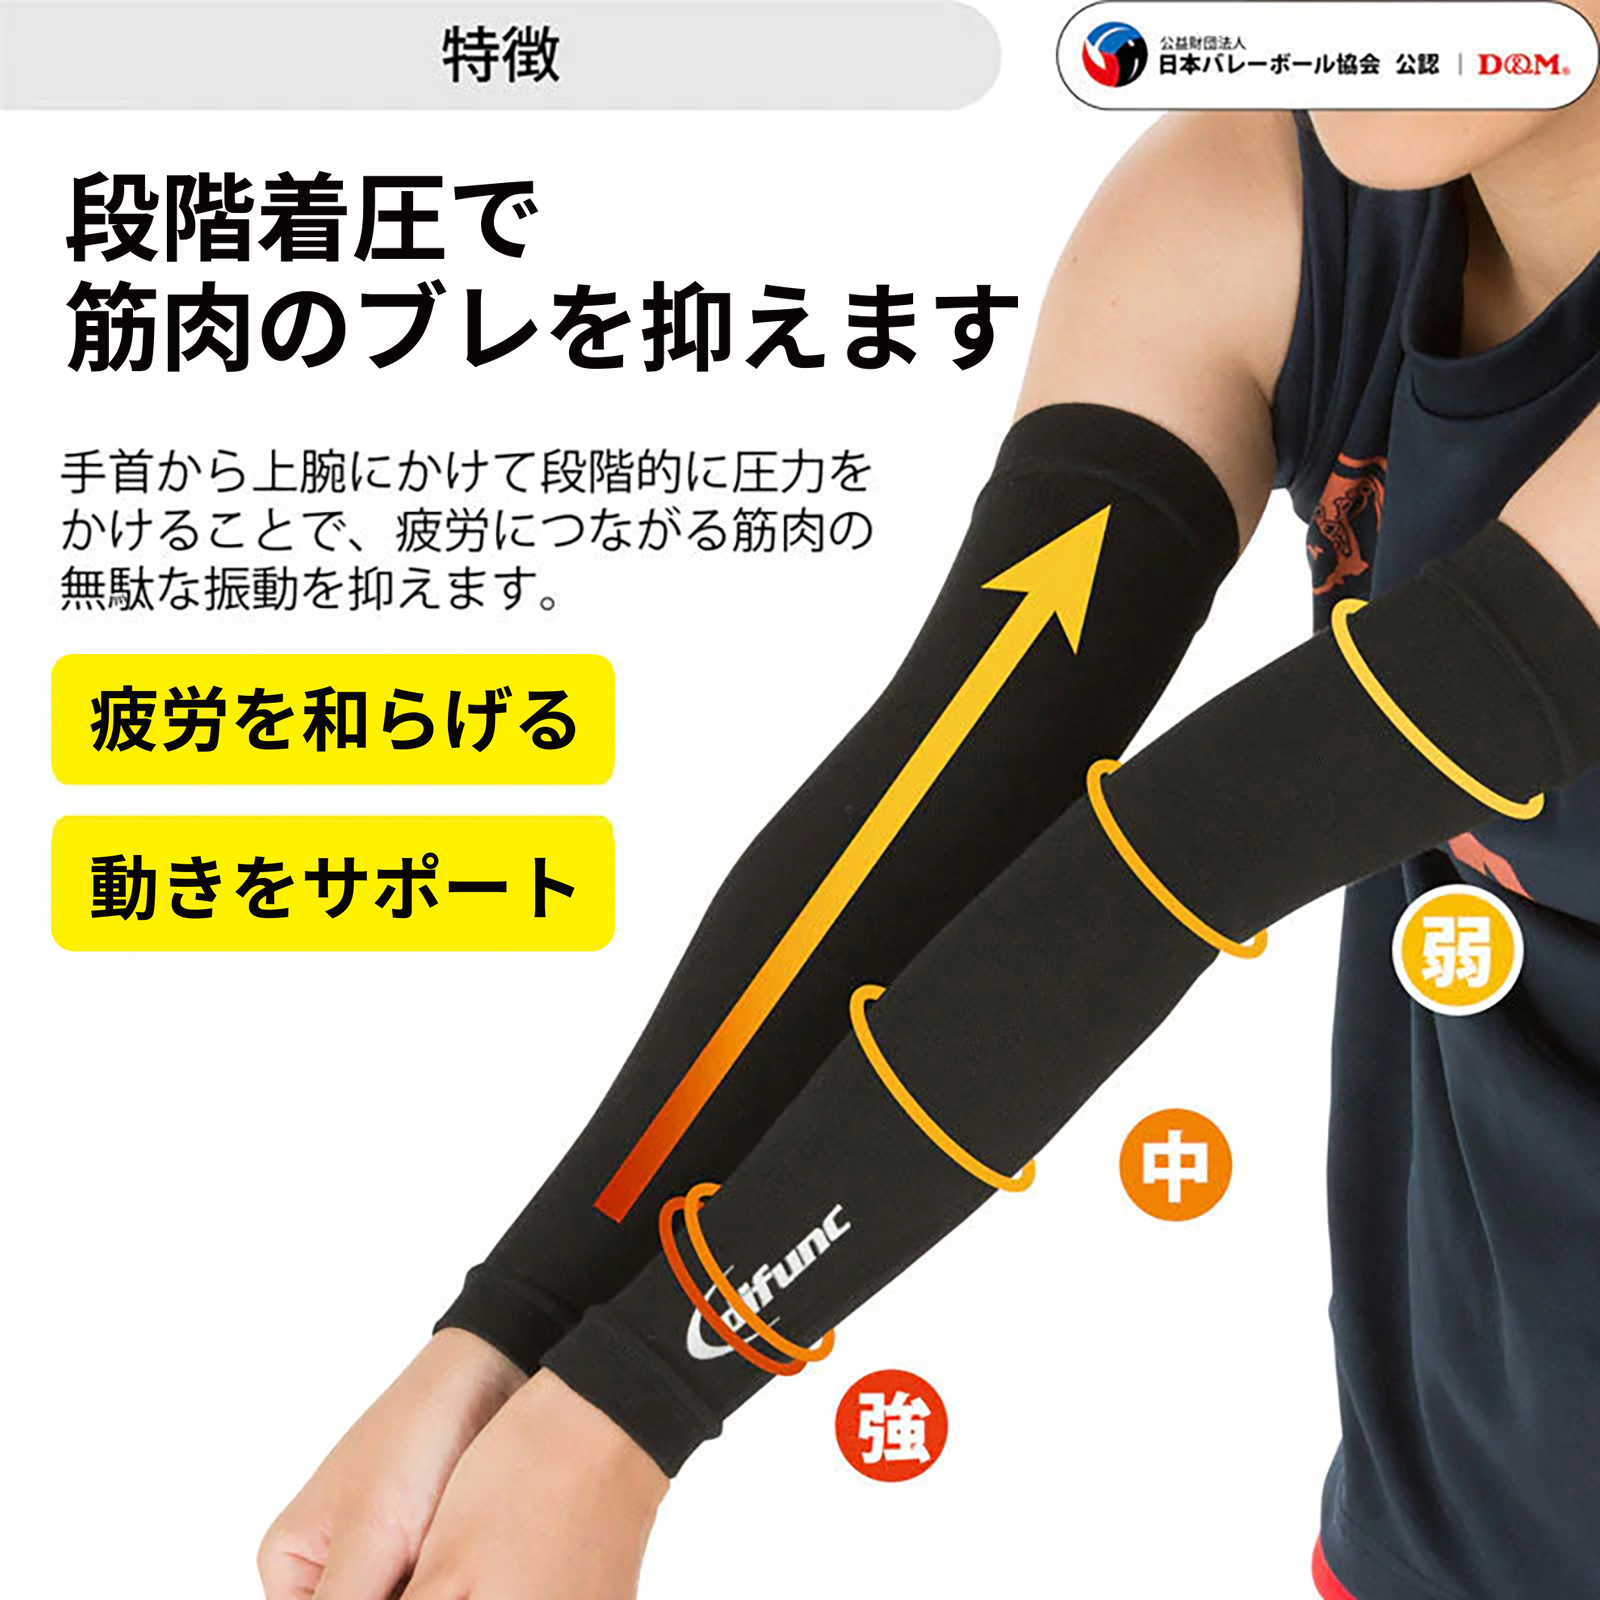 ti вентилятор k волейбол для arm рукав 1 пара ( обе рука ) входить #D-7000 опора рука гетры для рук рука покрытие патрубок спорт ti- and M официальный difunc